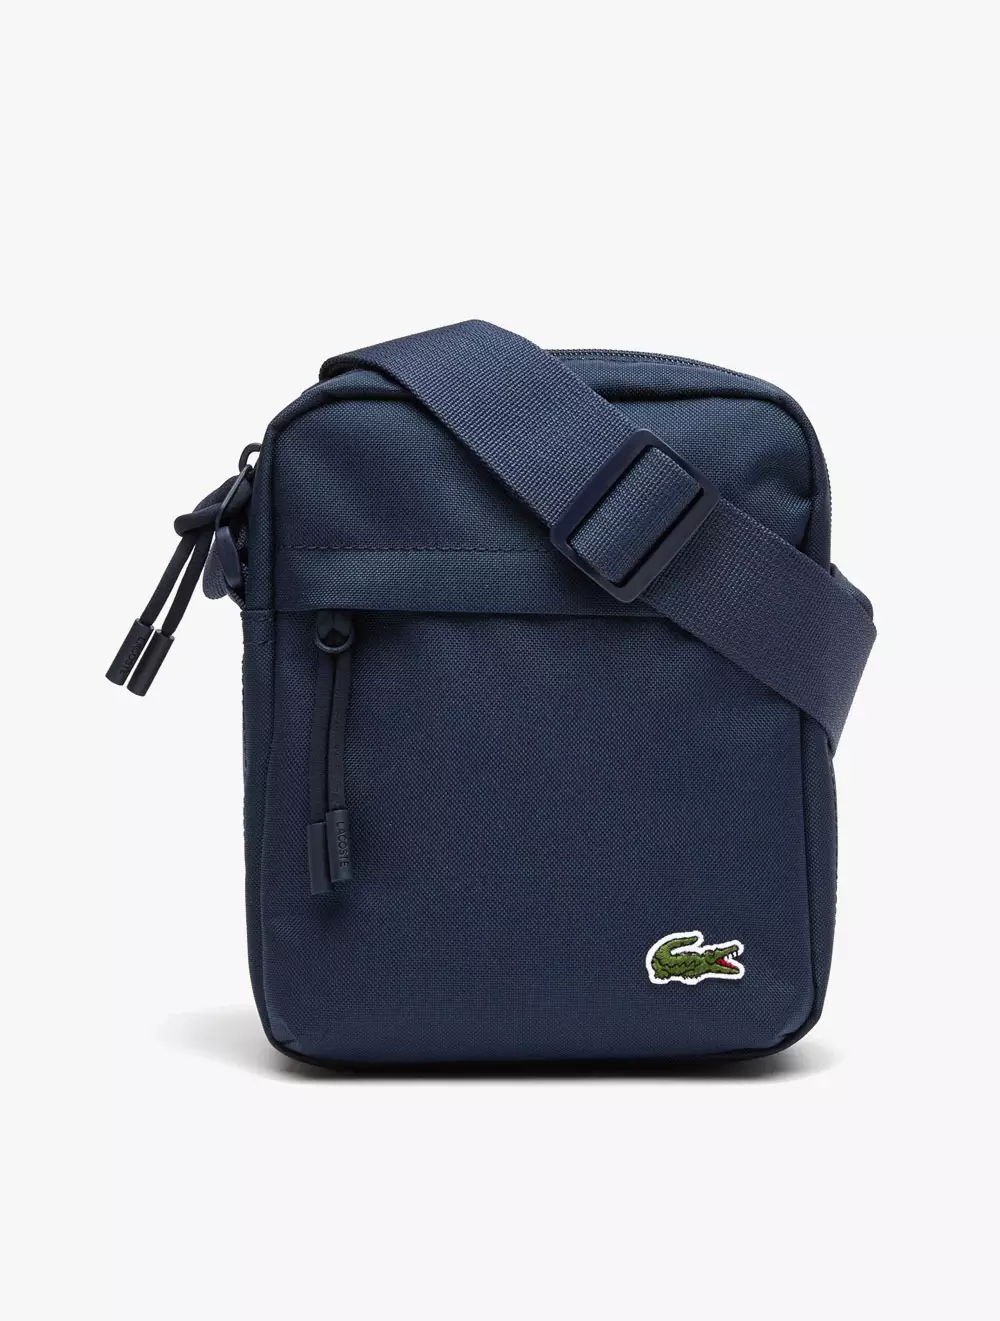 Lacoste Unisex Zip Crossover Bag 